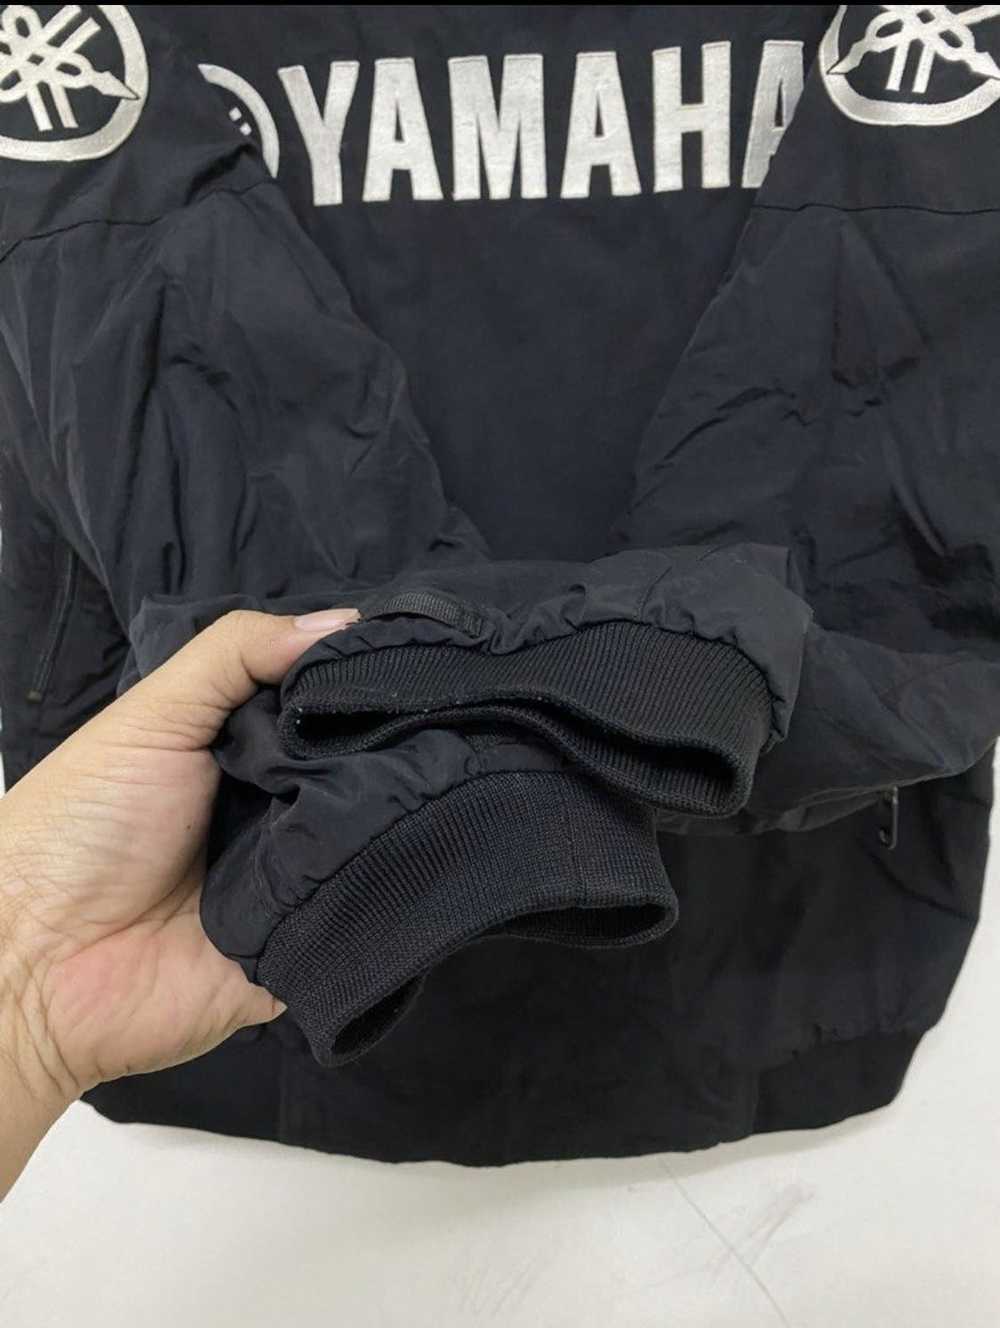 Racing × Sports Specialties × Yamaha YAMAHA jacket - image 7